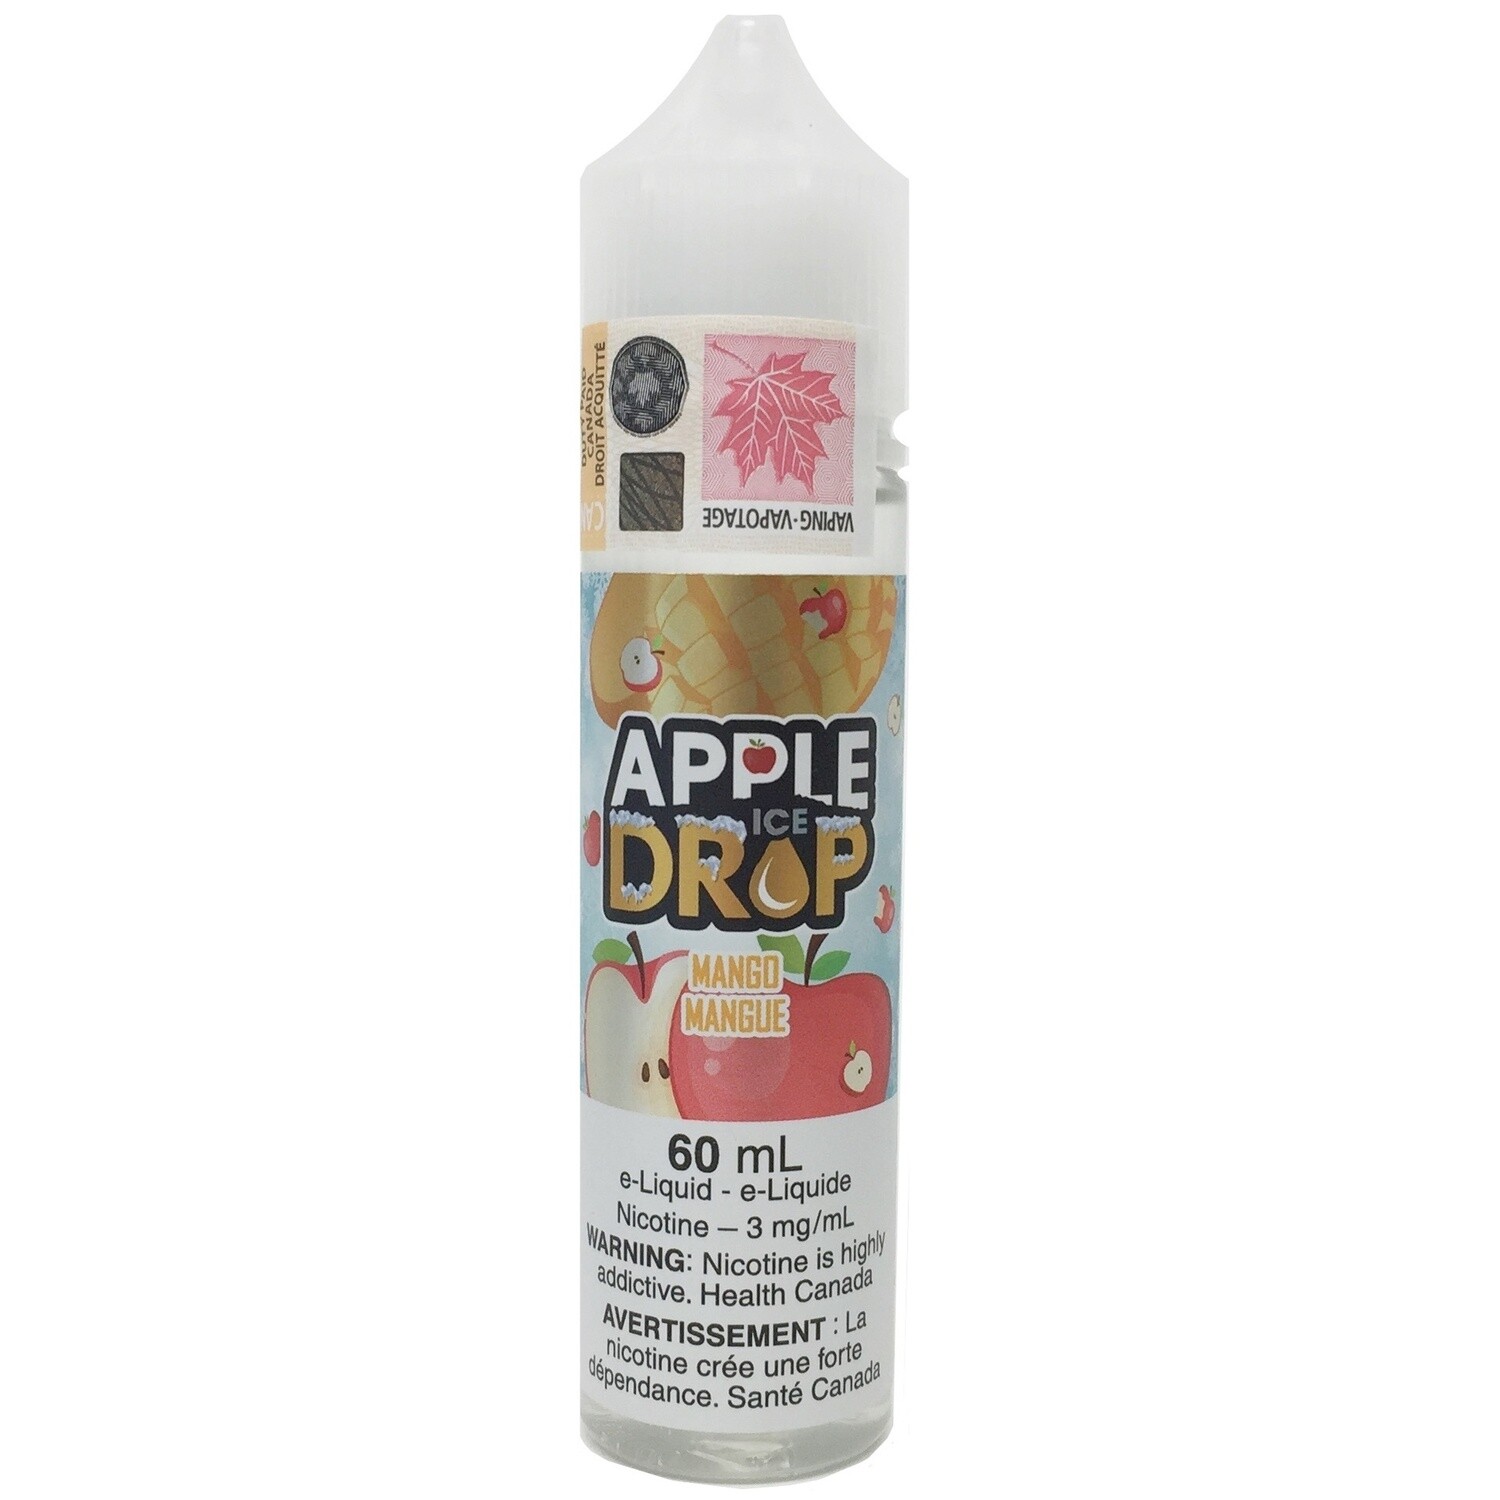 Apple Drop ICE - Mango (60ml) Eliquid